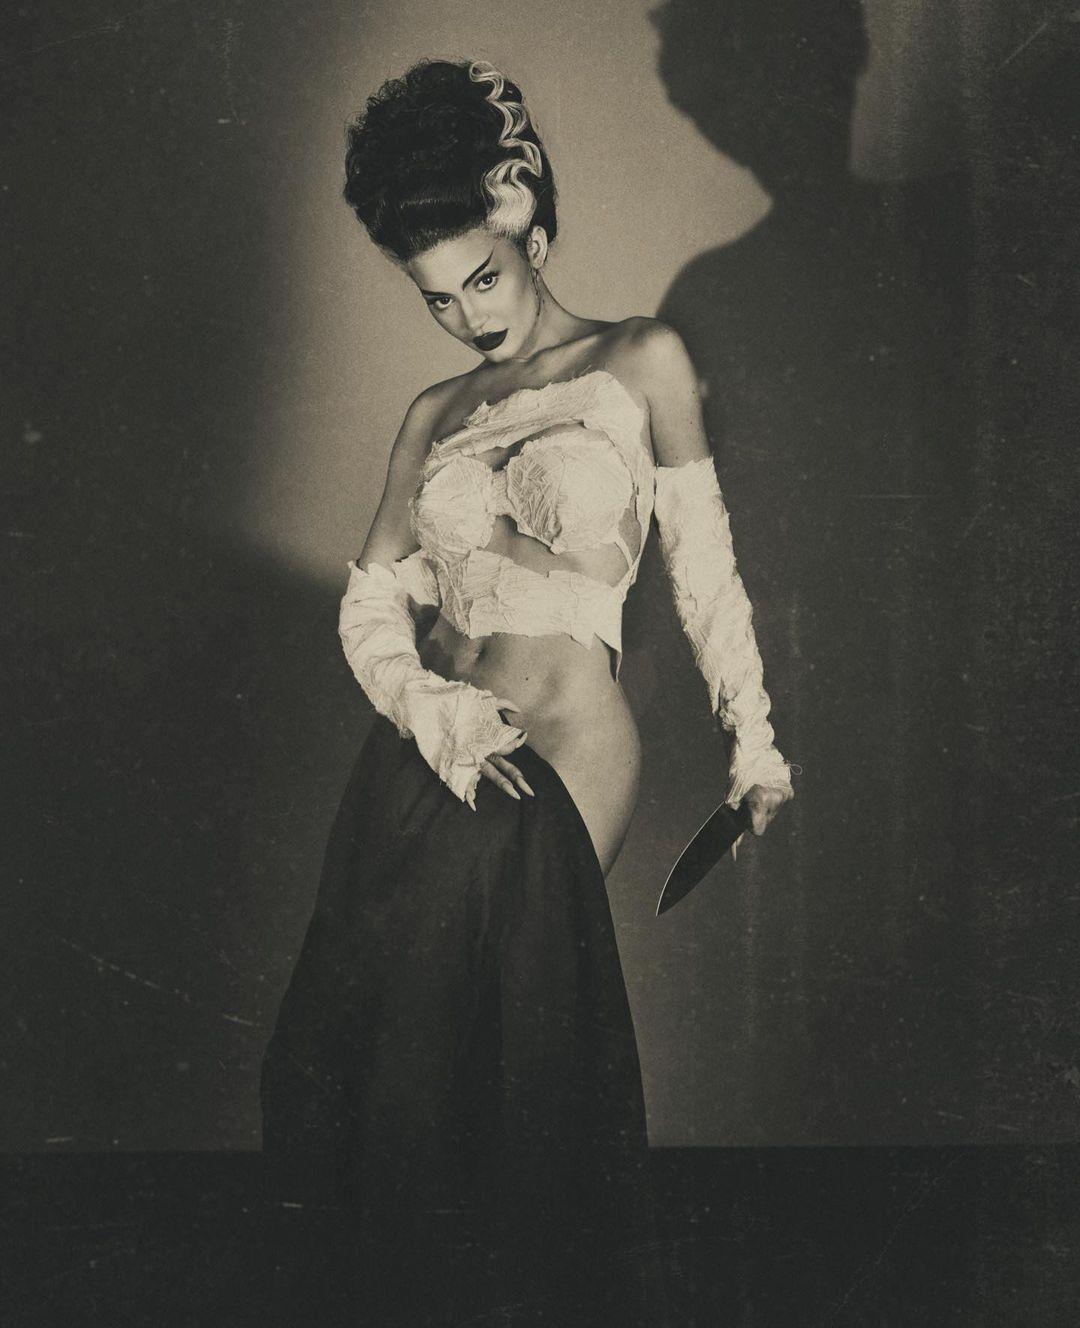 Kylie Jenner as Bride of Frankenstein for Halloween